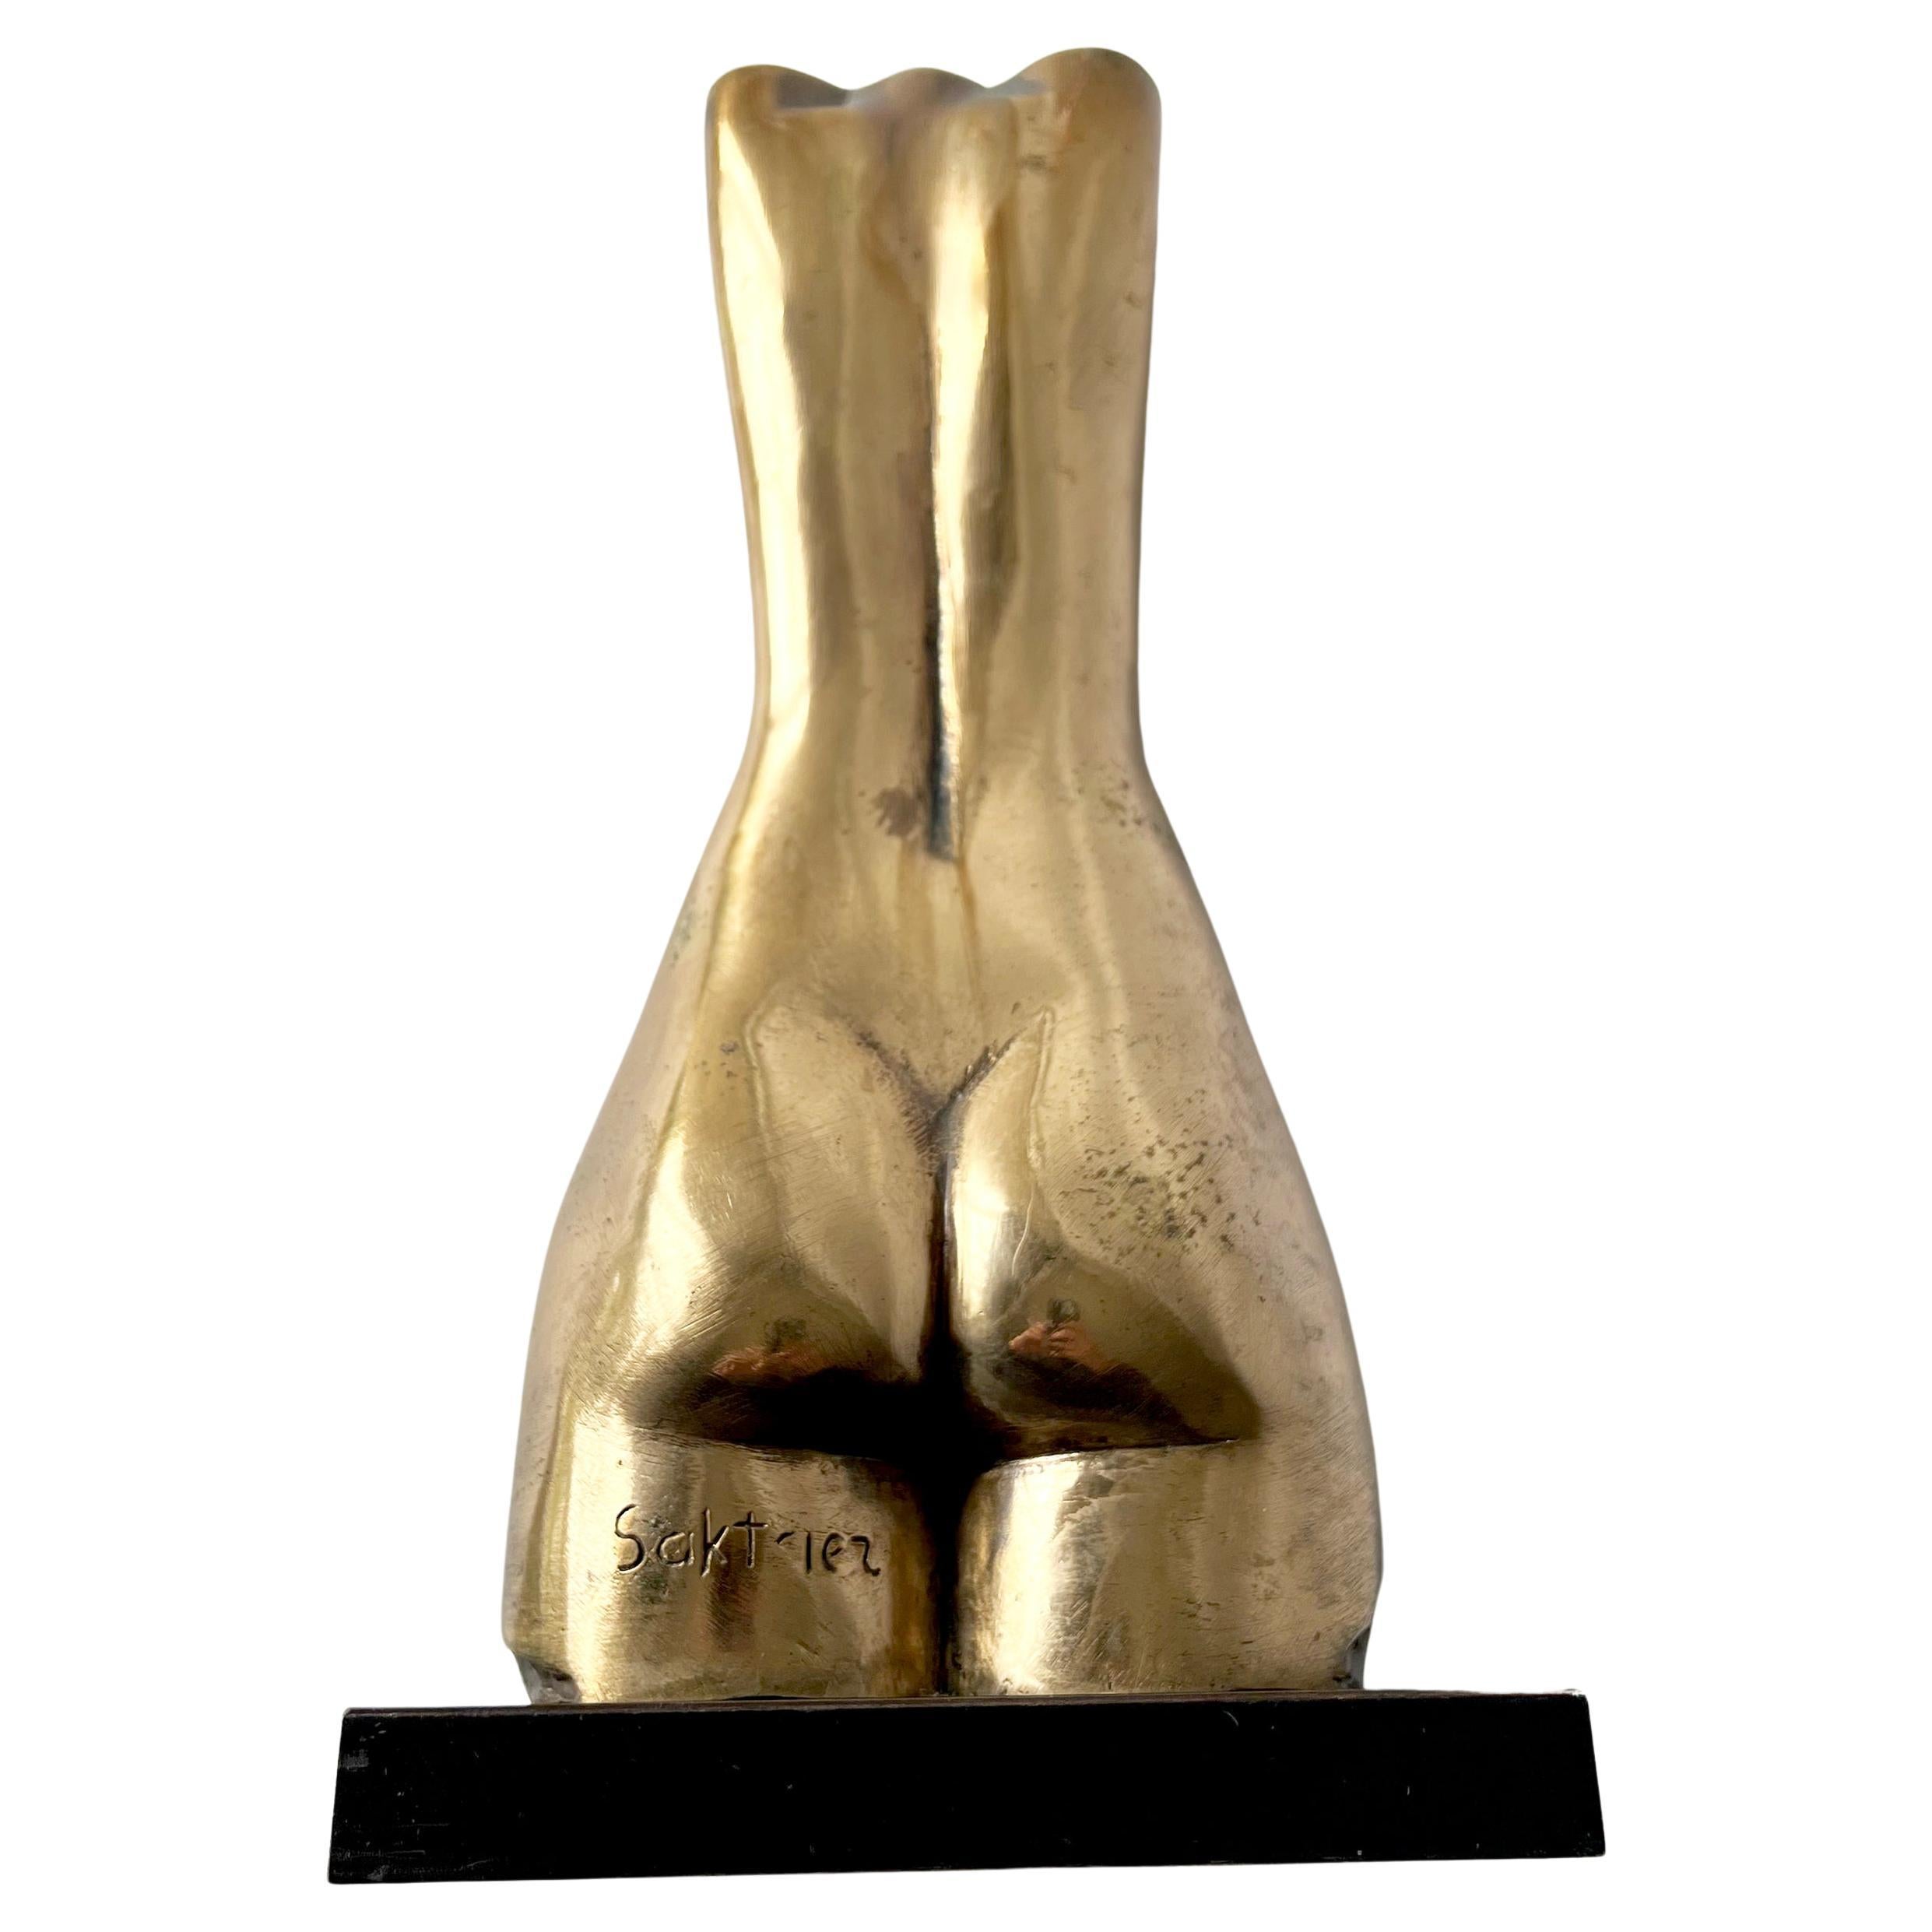 Bronze female torso by listed Russian Israeli sculptor, Baruch Saktsier. Sculpture measures 14